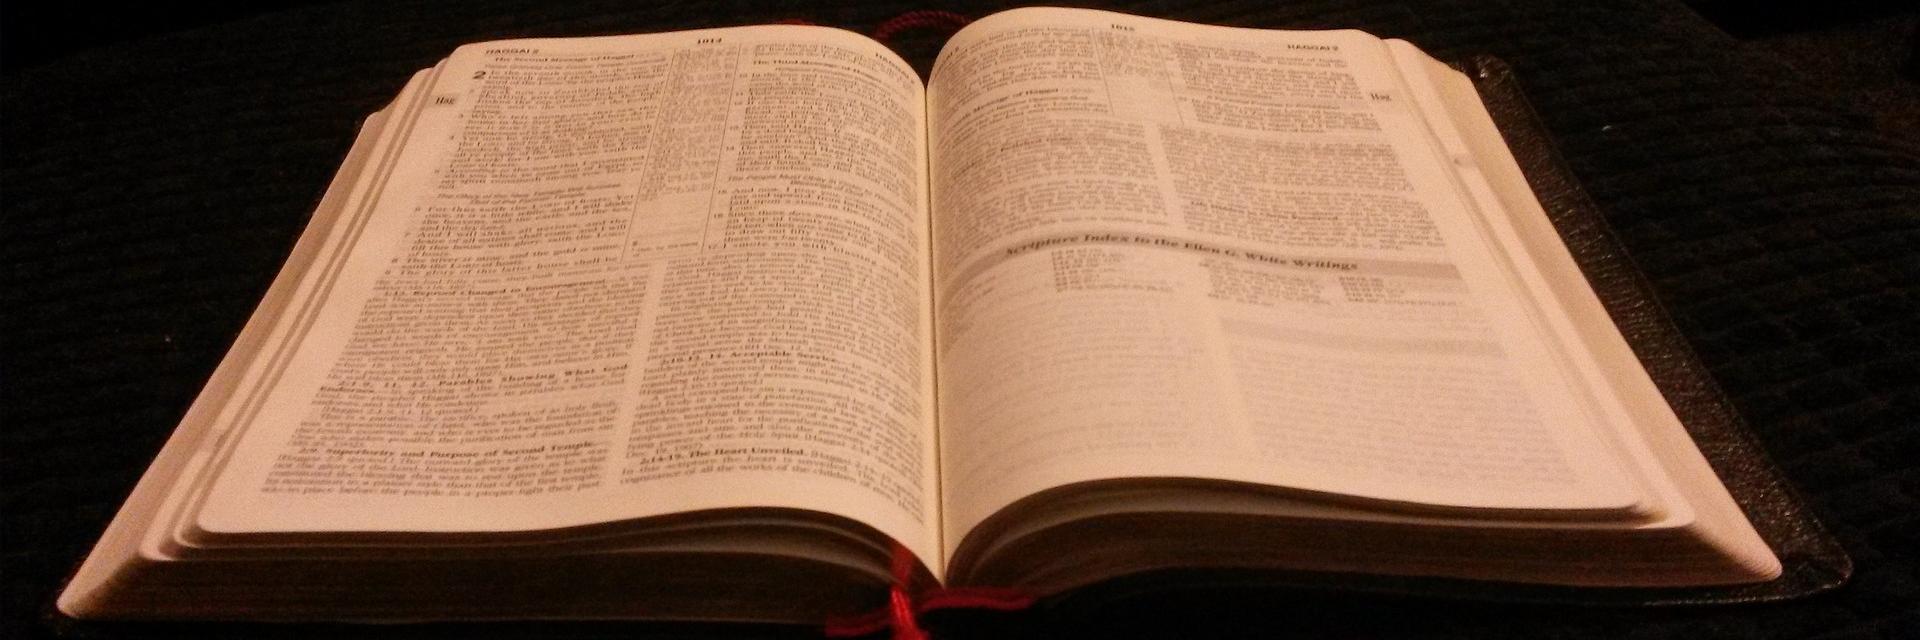 Bibel (c) www.pixabay.com